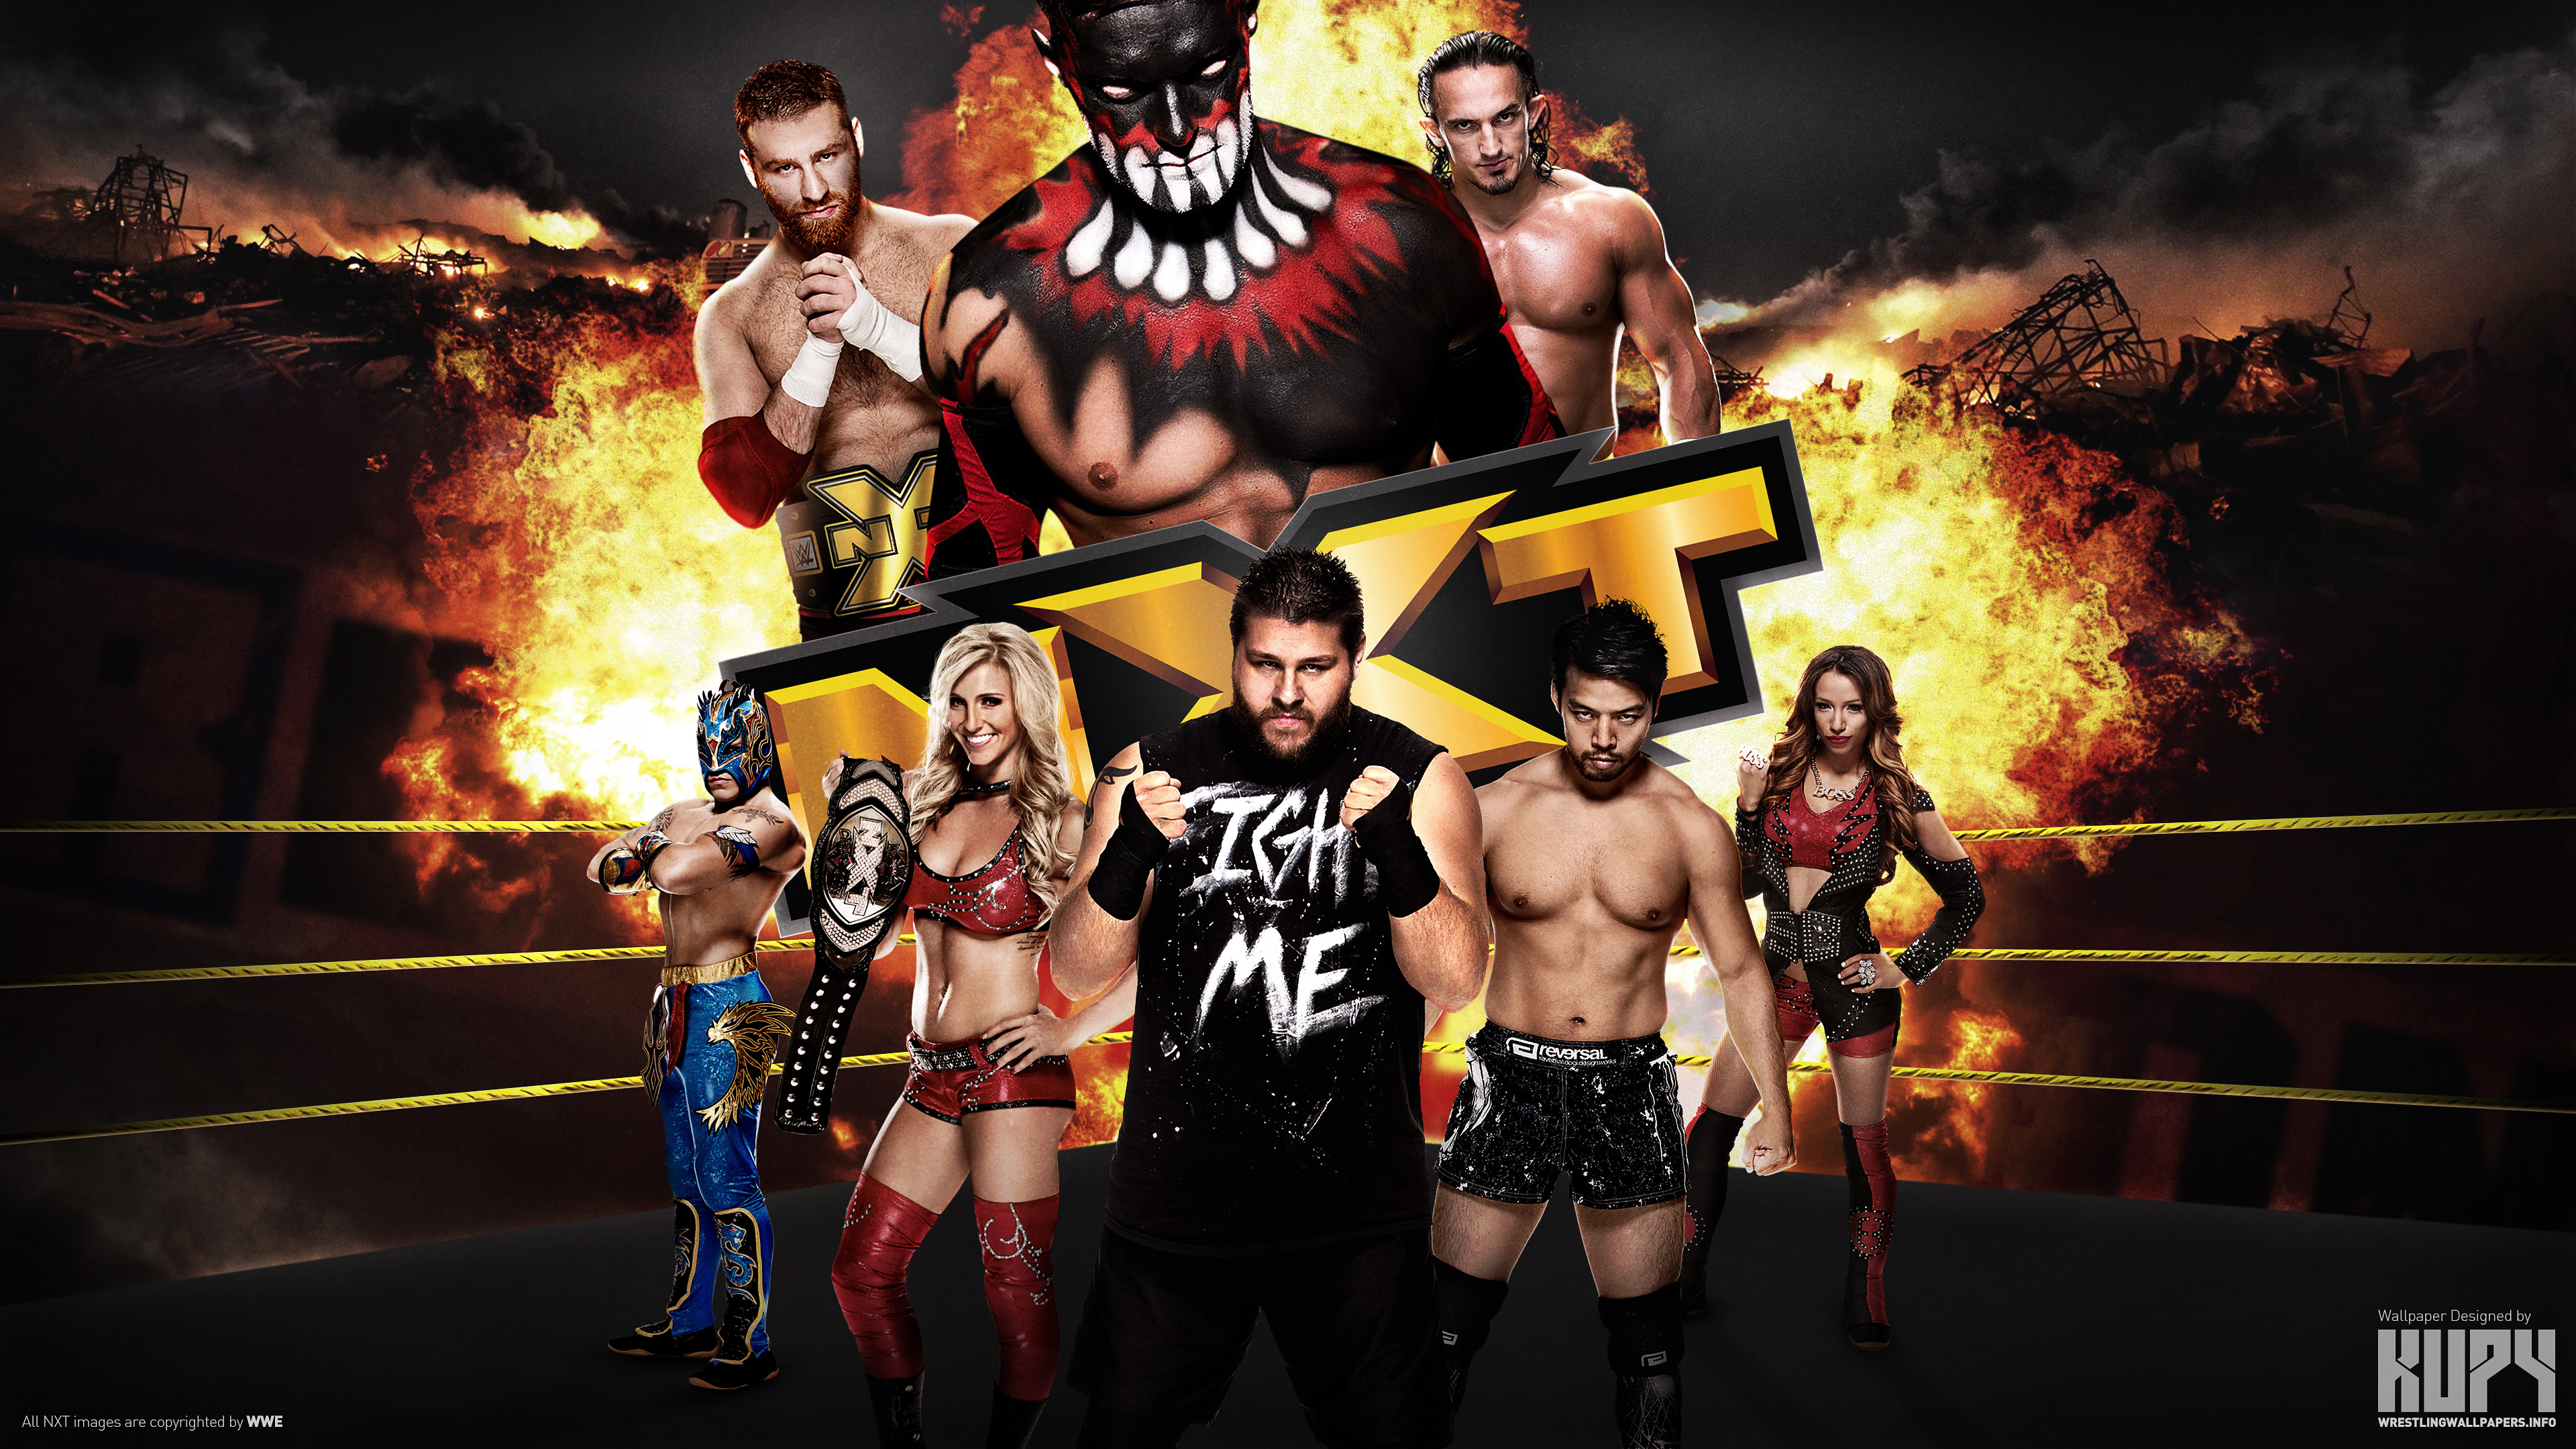 NEW 2015 NXT REvolution wallpaper! - Kupy Wrestling Wallpapers